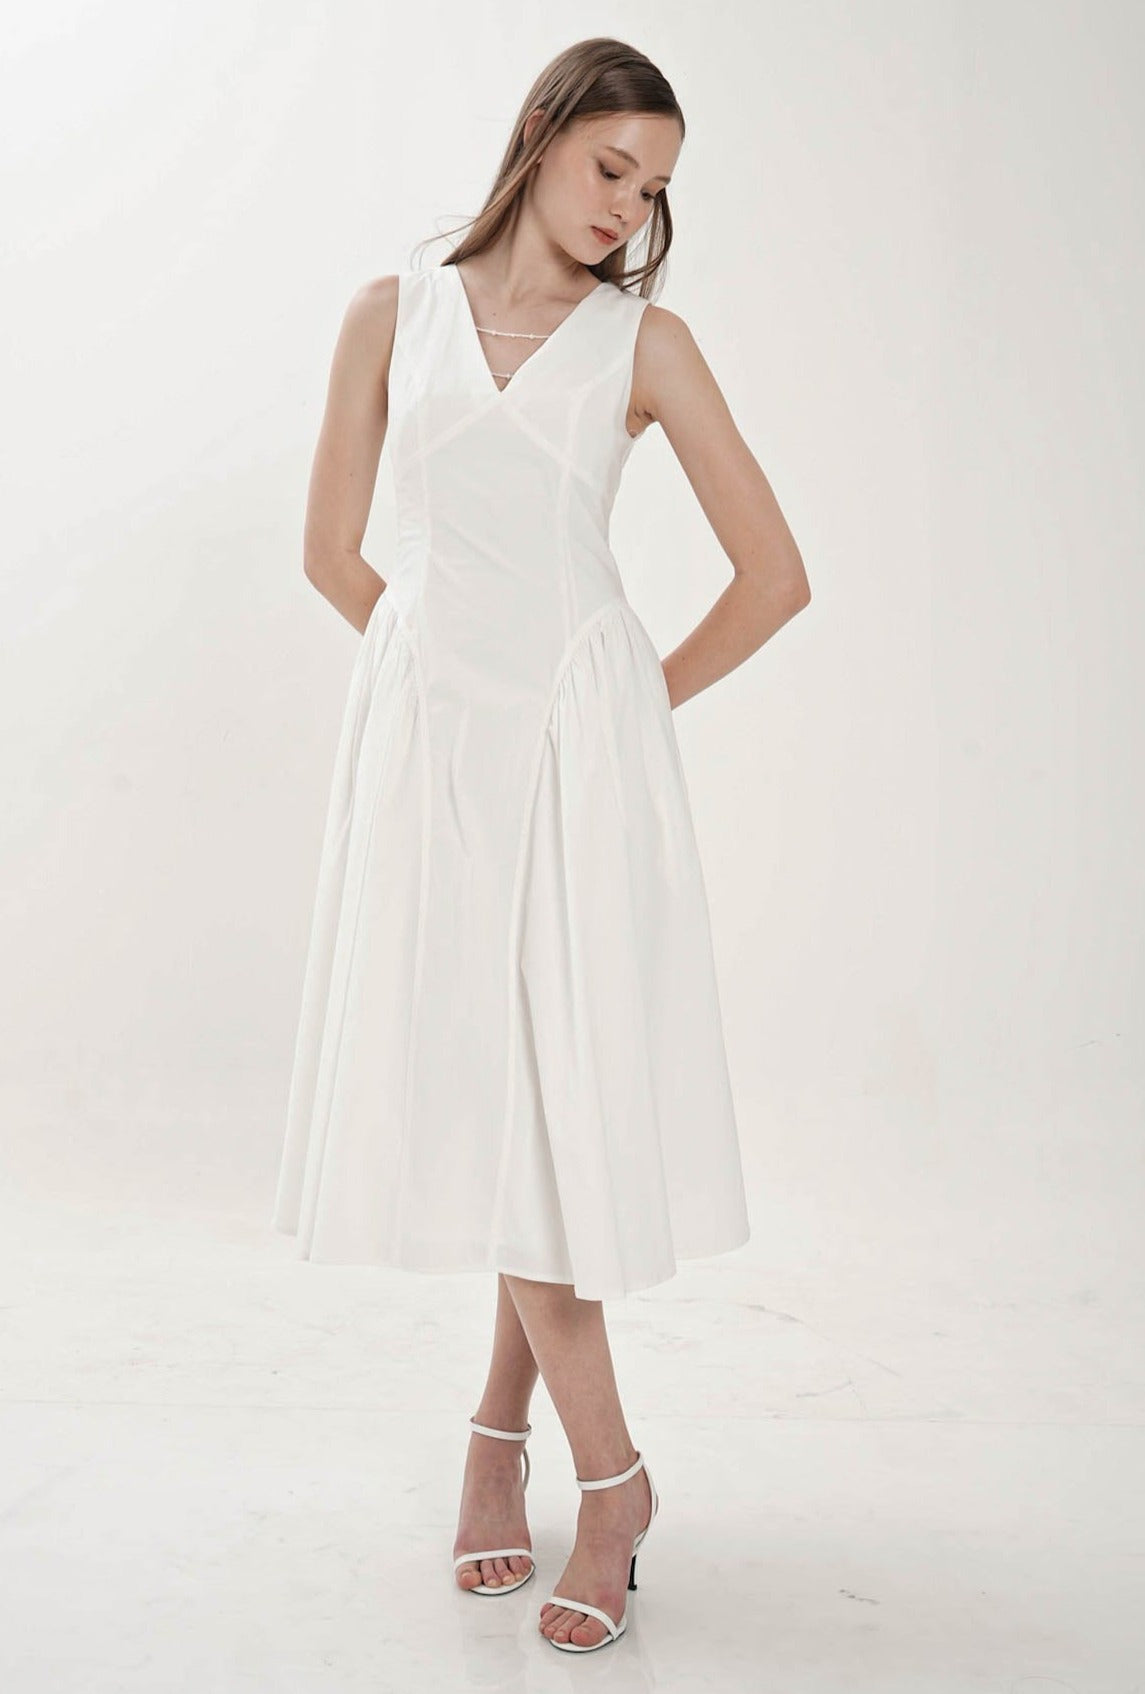 Junia Midi Dress In White